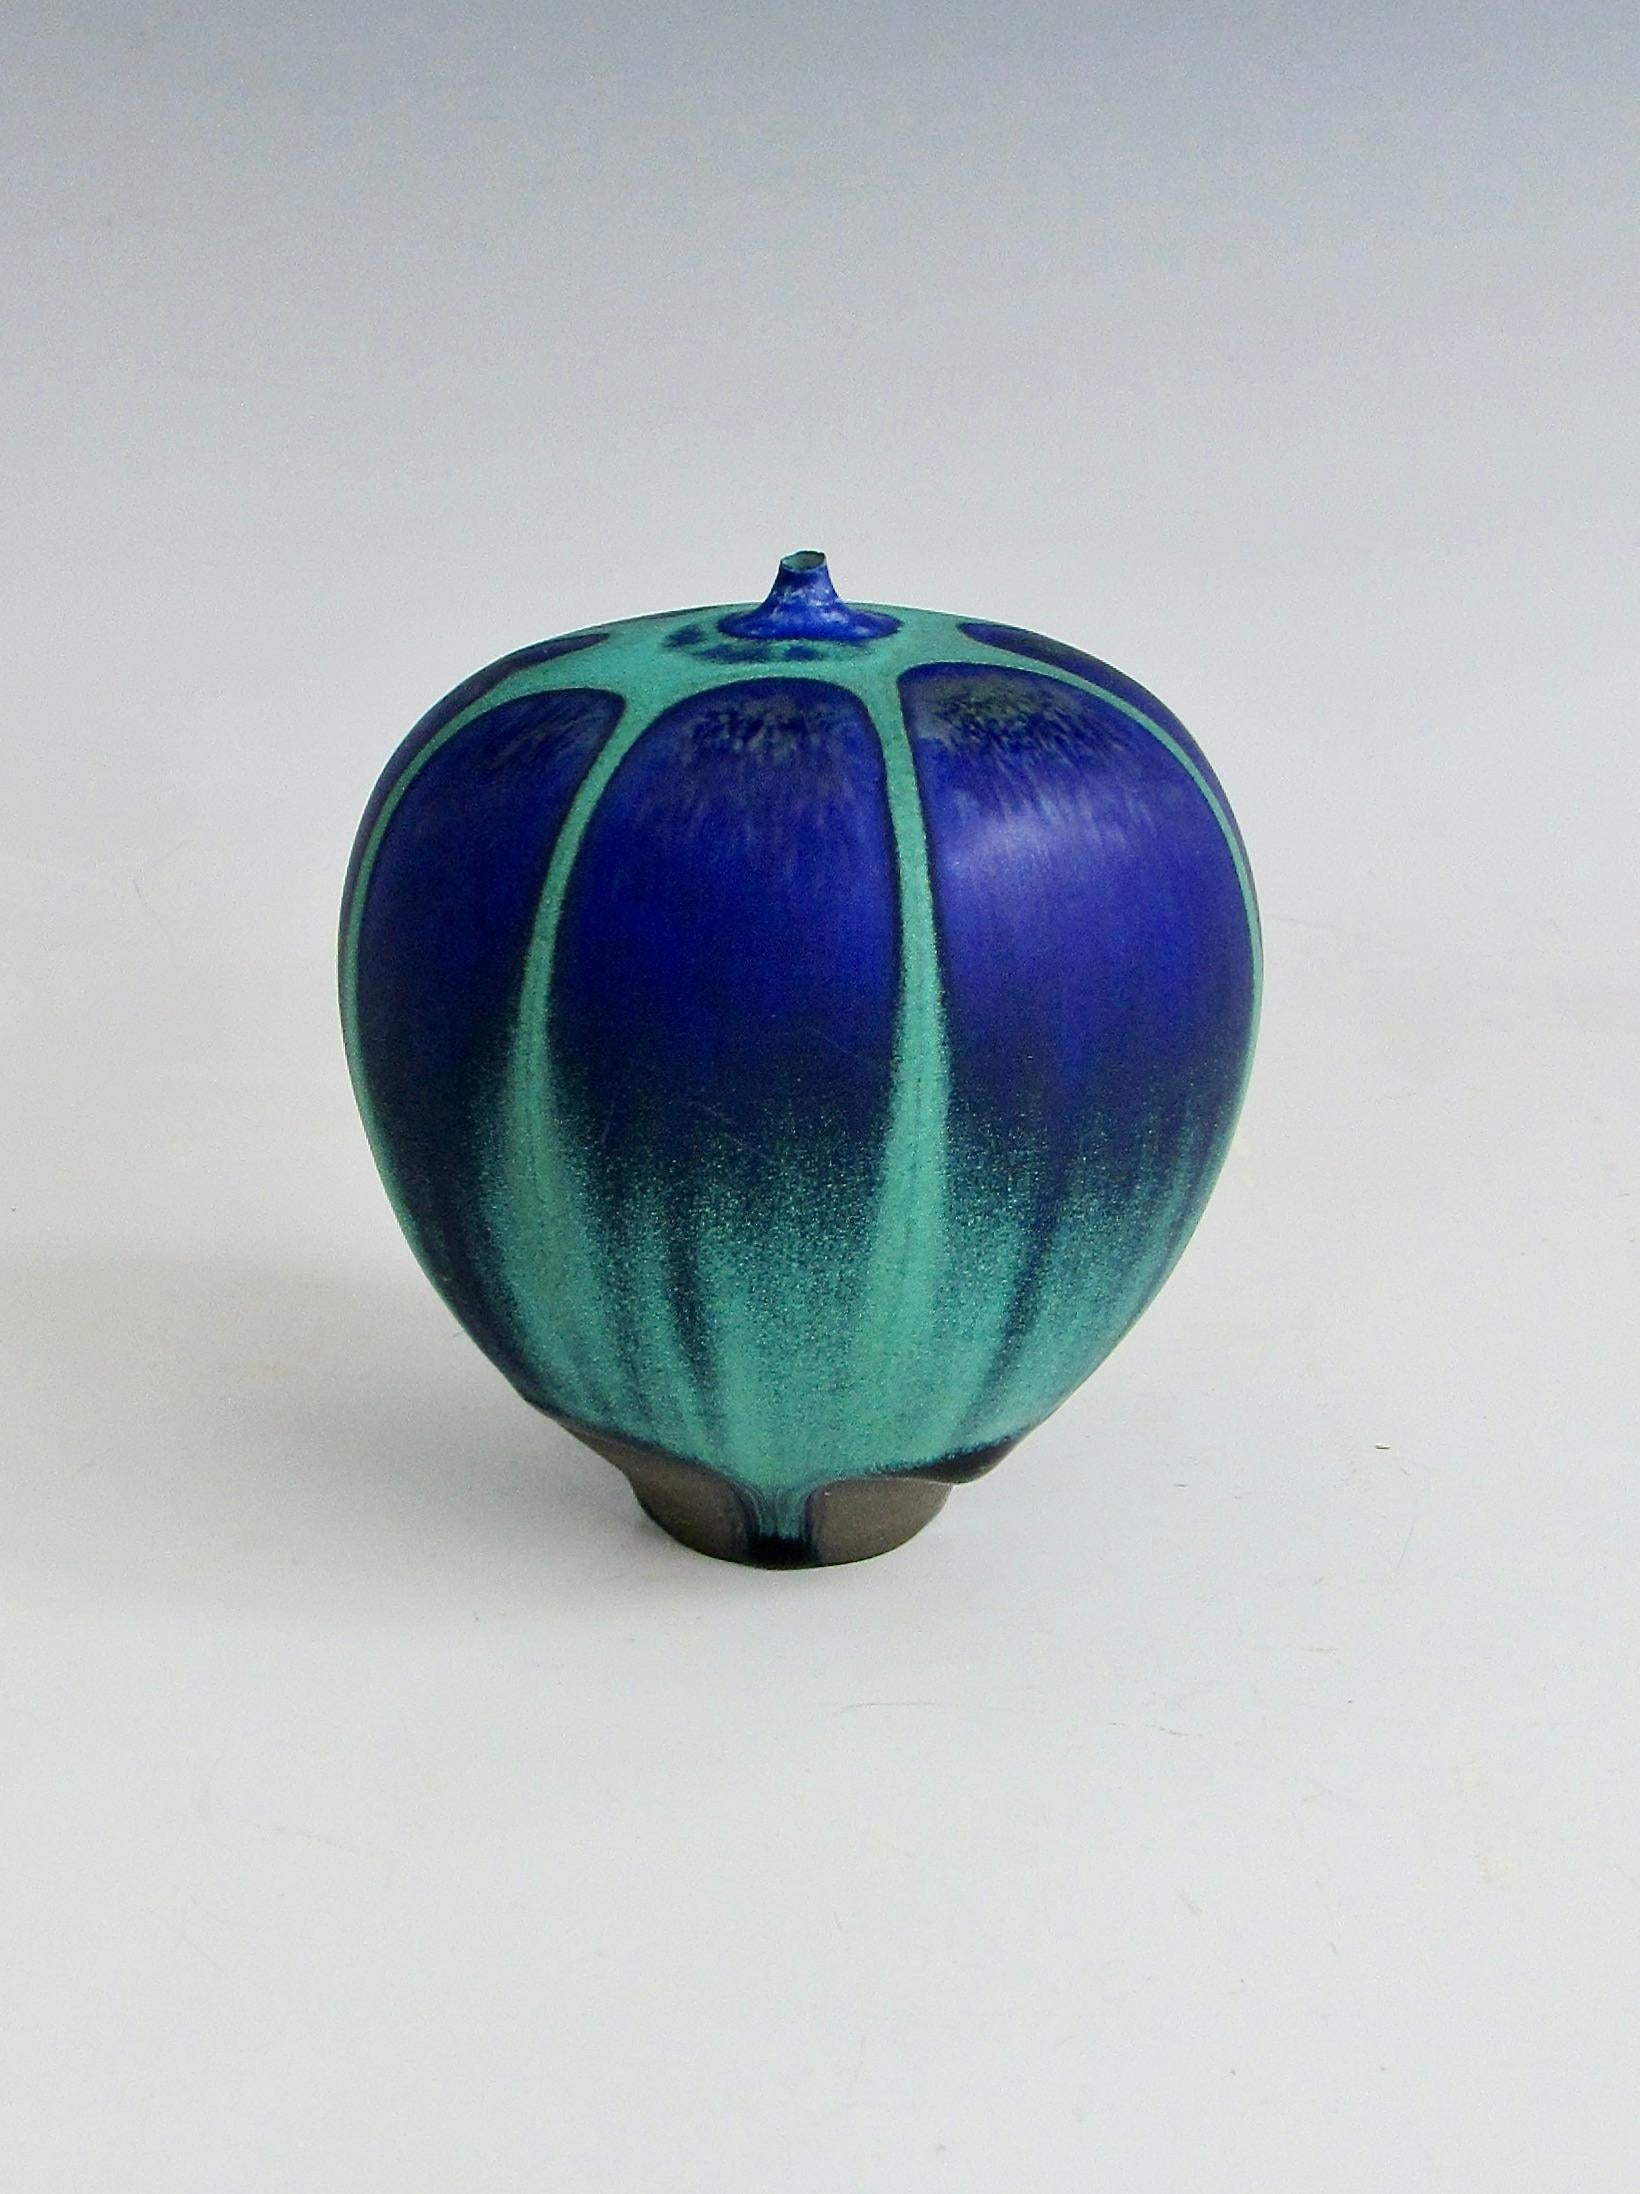  Rose Cabat Tiefblau über Meeresgrün über Meeresgrün  Feelie Vase Unkraut Topf (Handgefertigt) im Angebot